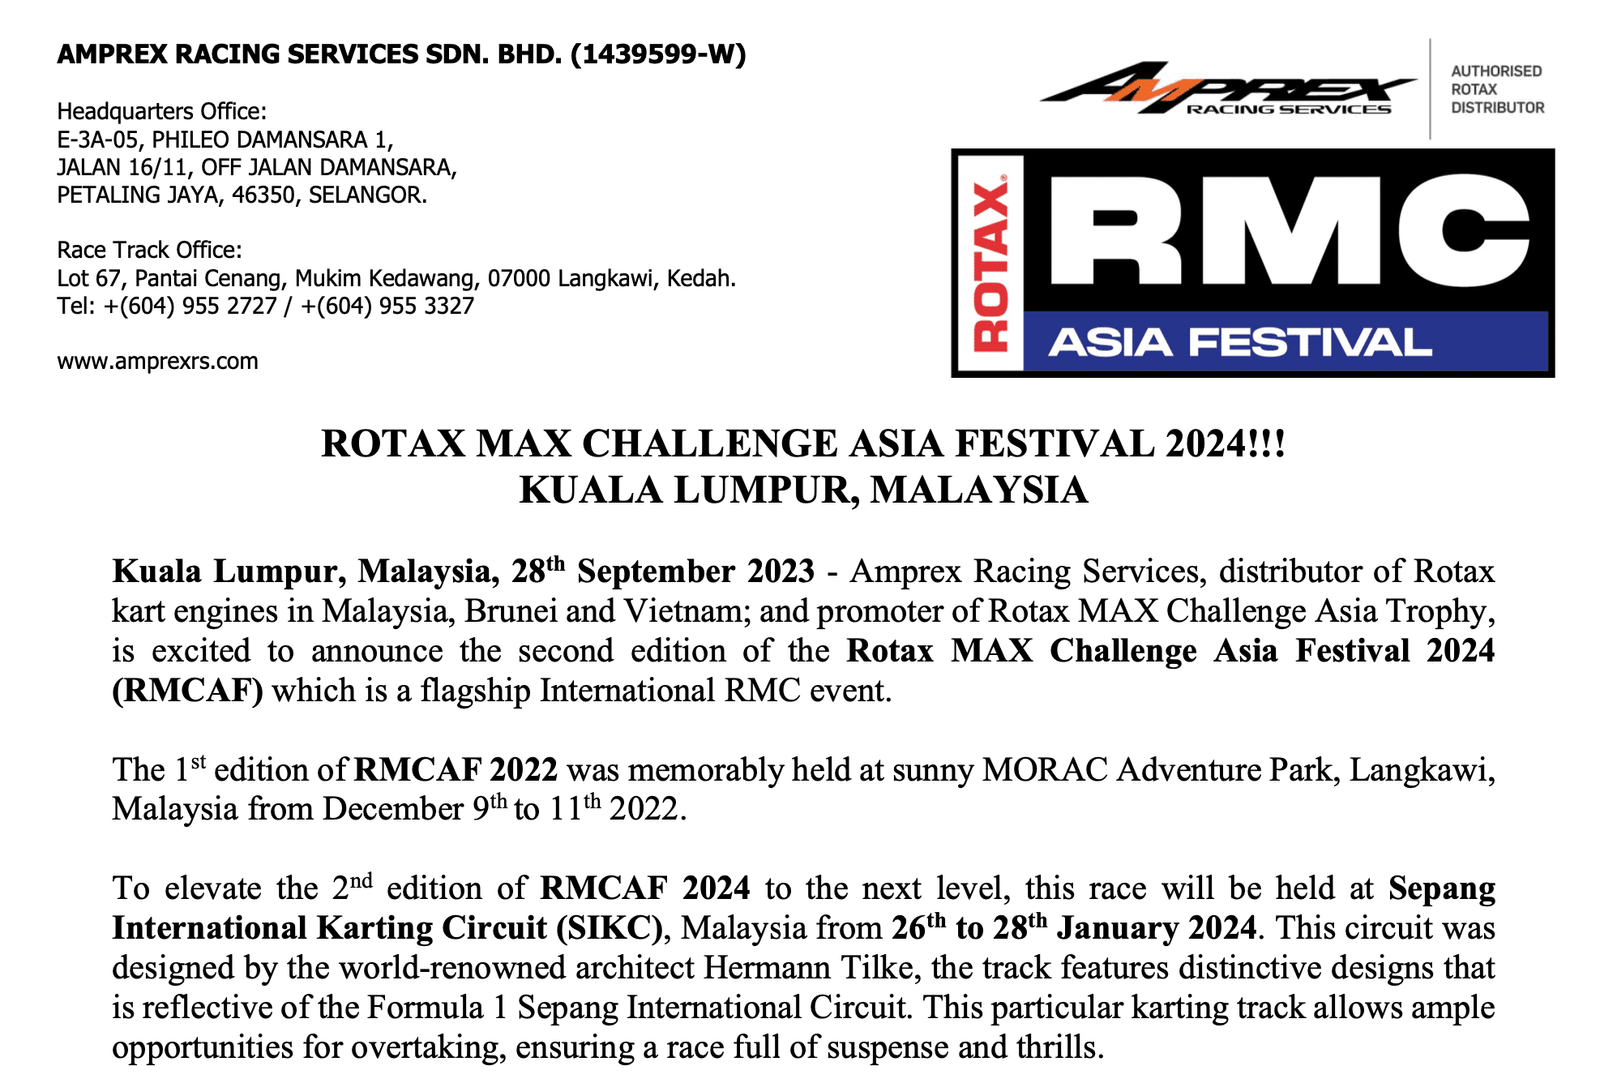 ROTAX MAX CHALLENGE ASIA FESTIVAL 2024 Press Release Rotax Max Challenge Asia Festival by